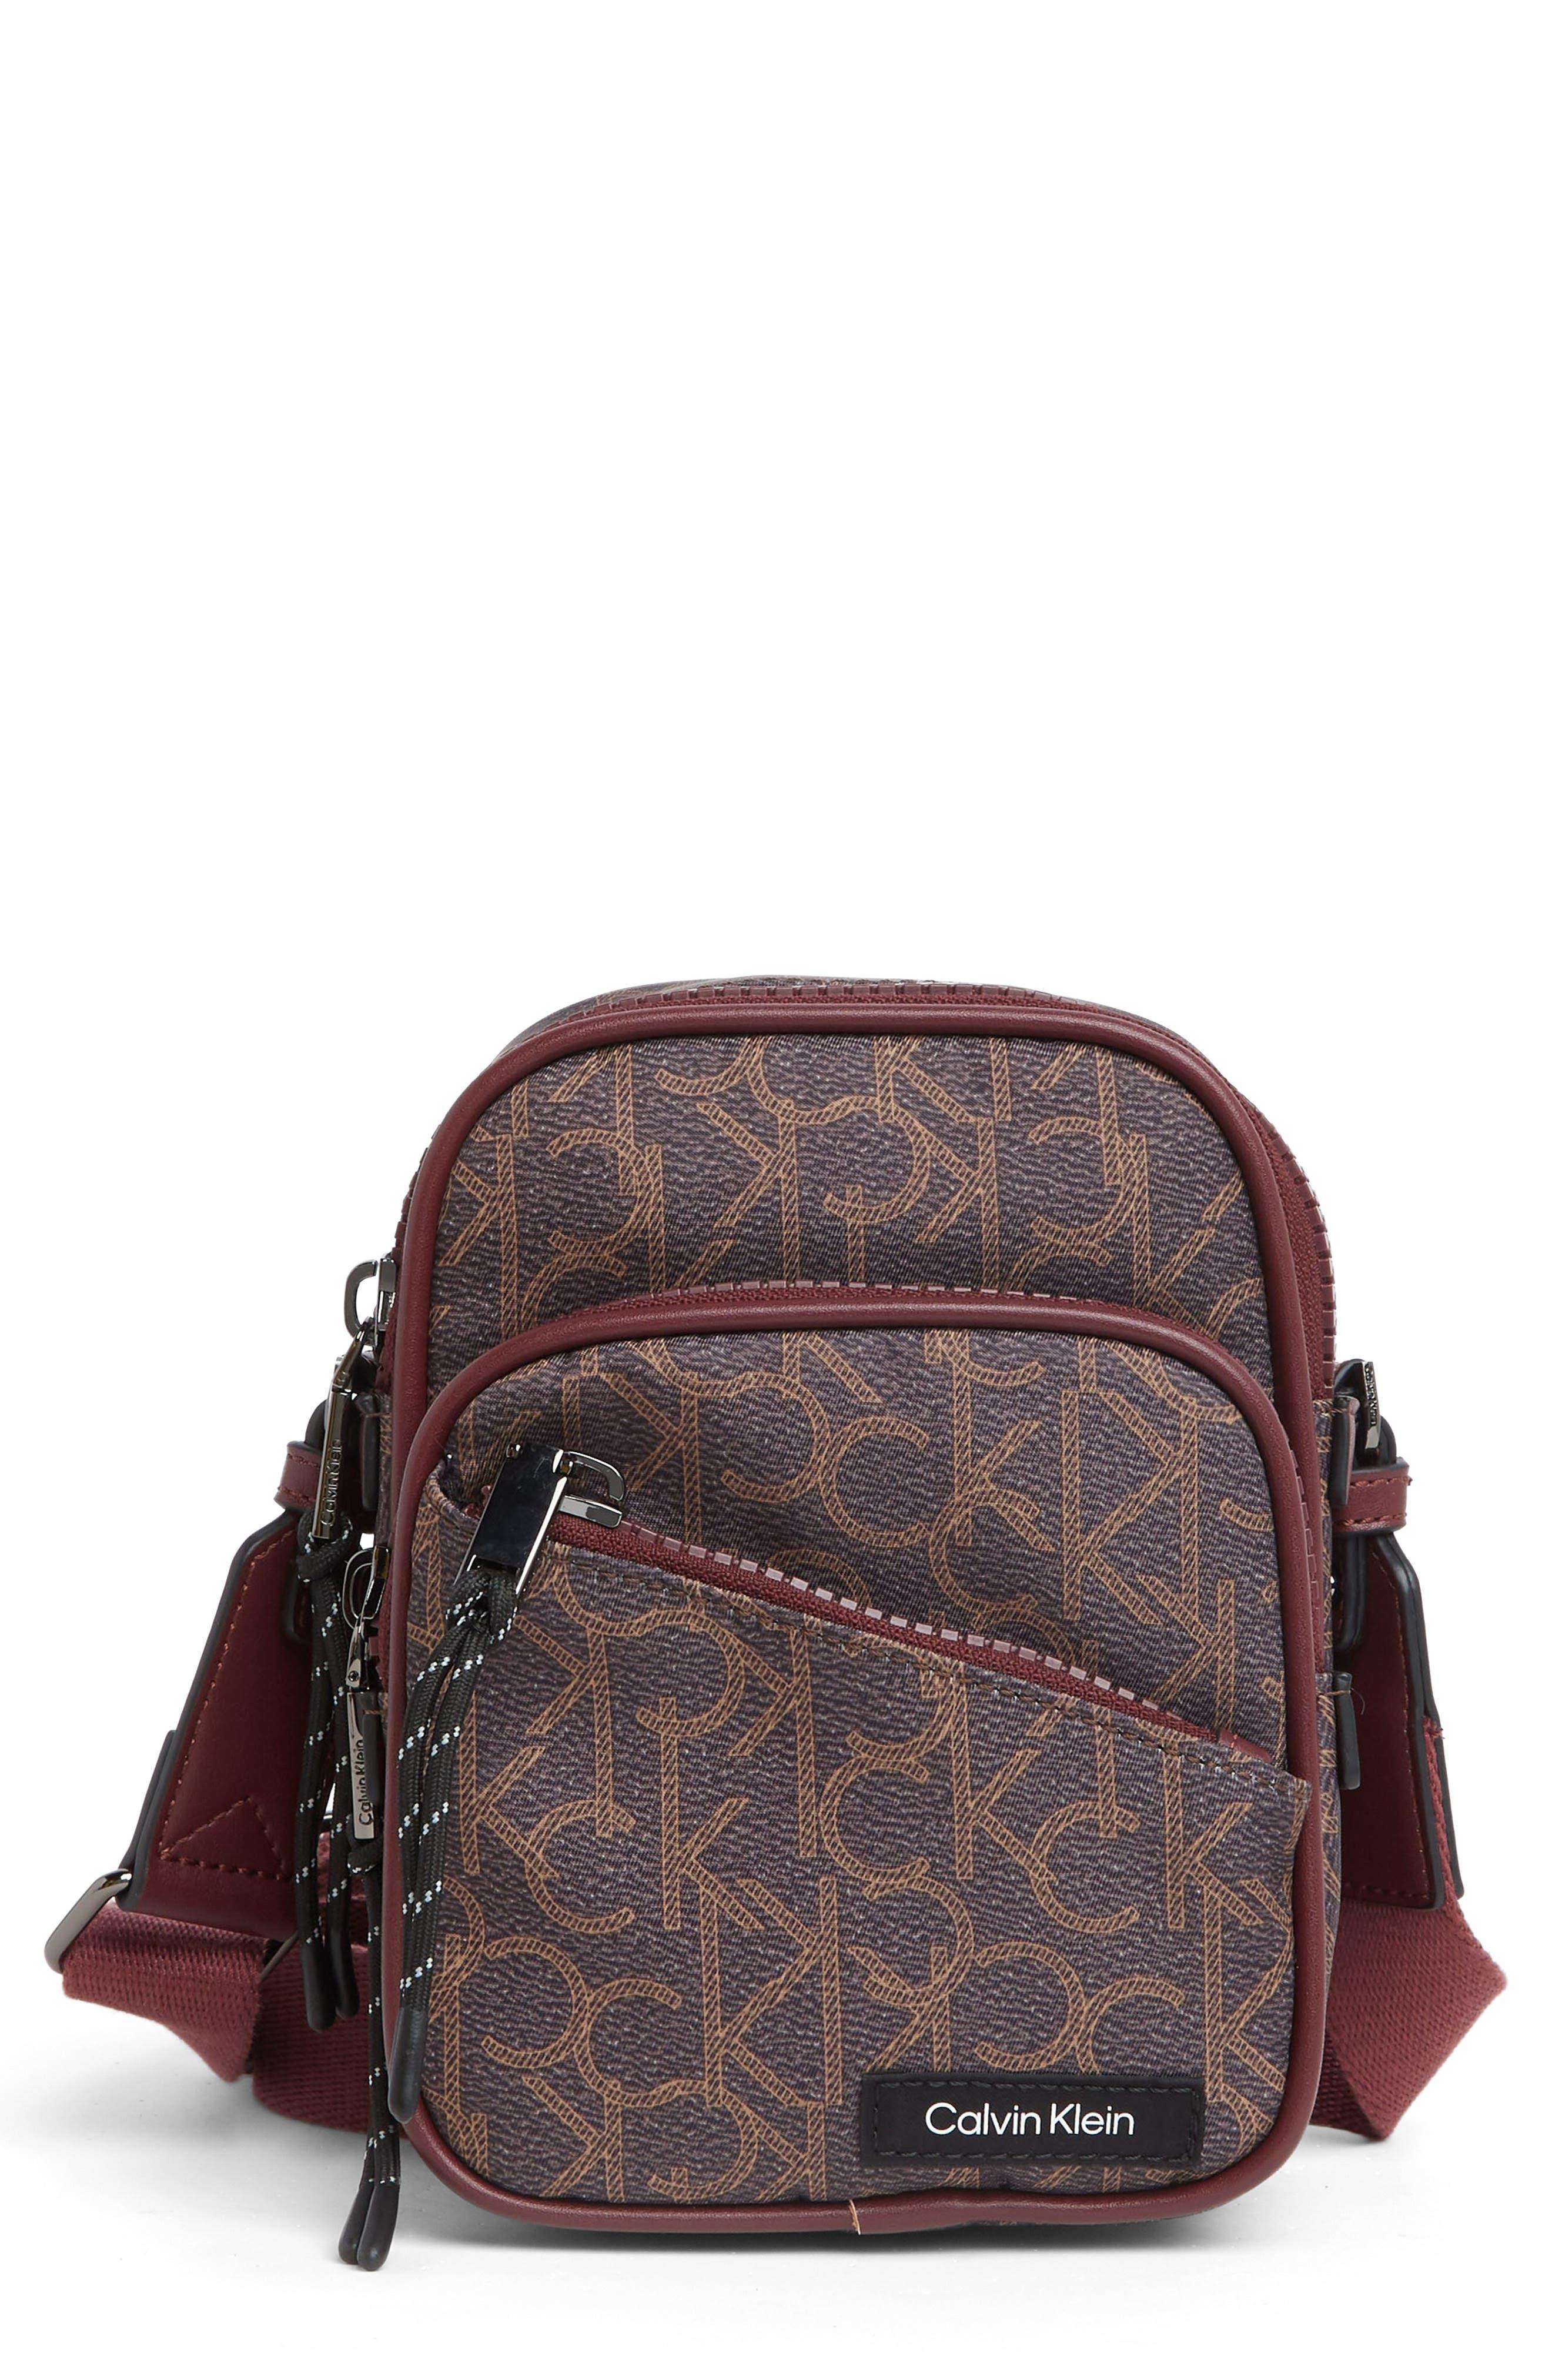 Calvin Klein Evie Crossbody Bag in Brown